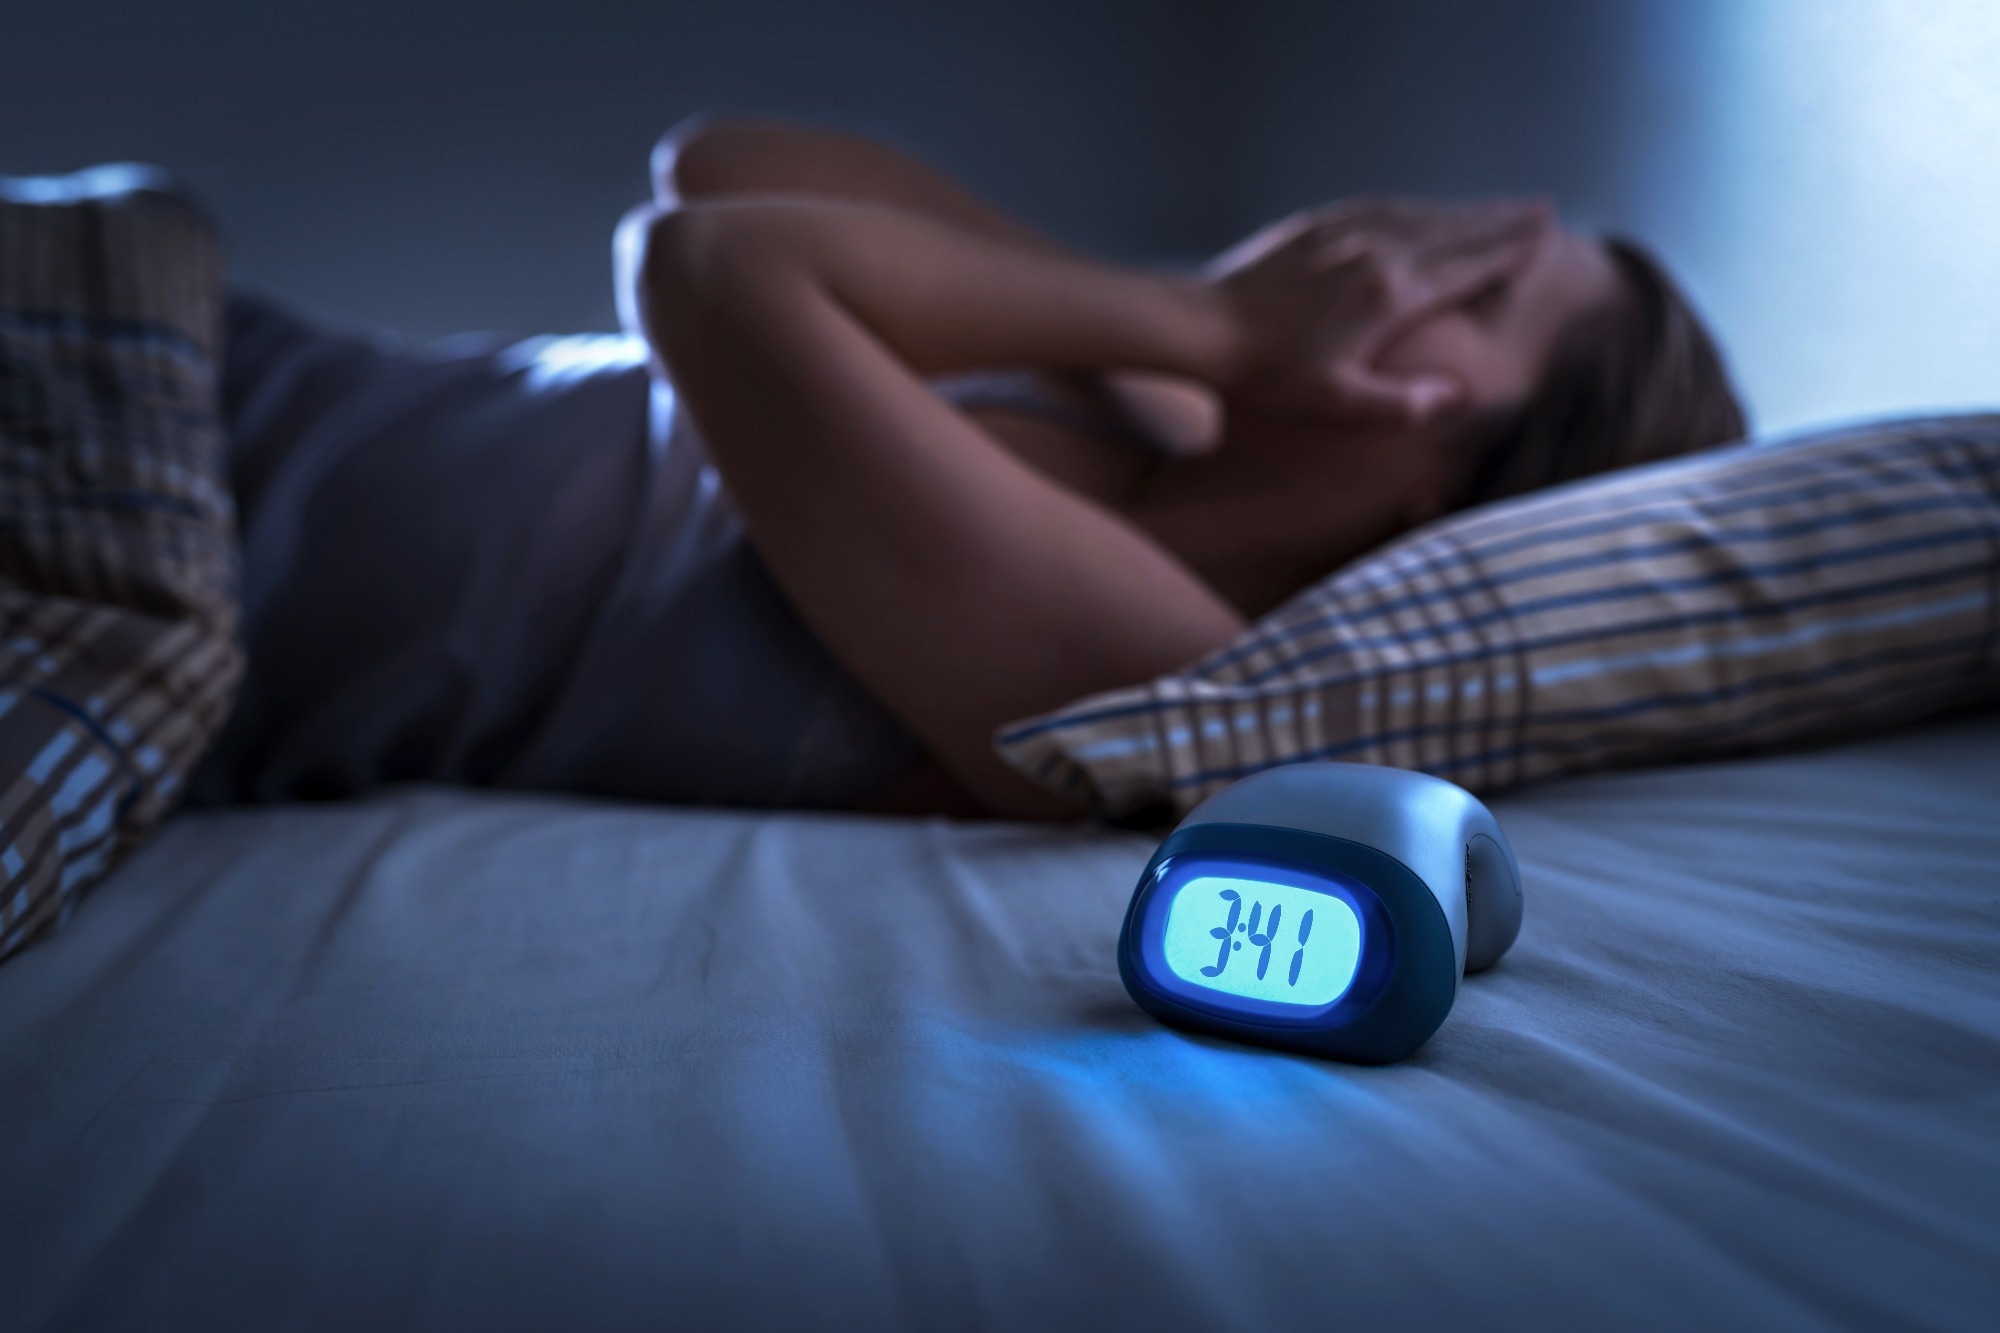 Study: Longitudinal Sleep Patterns and Cognitive Impairment in Older Adults. Image Credit: Tero Vesalainen / Shutterstock